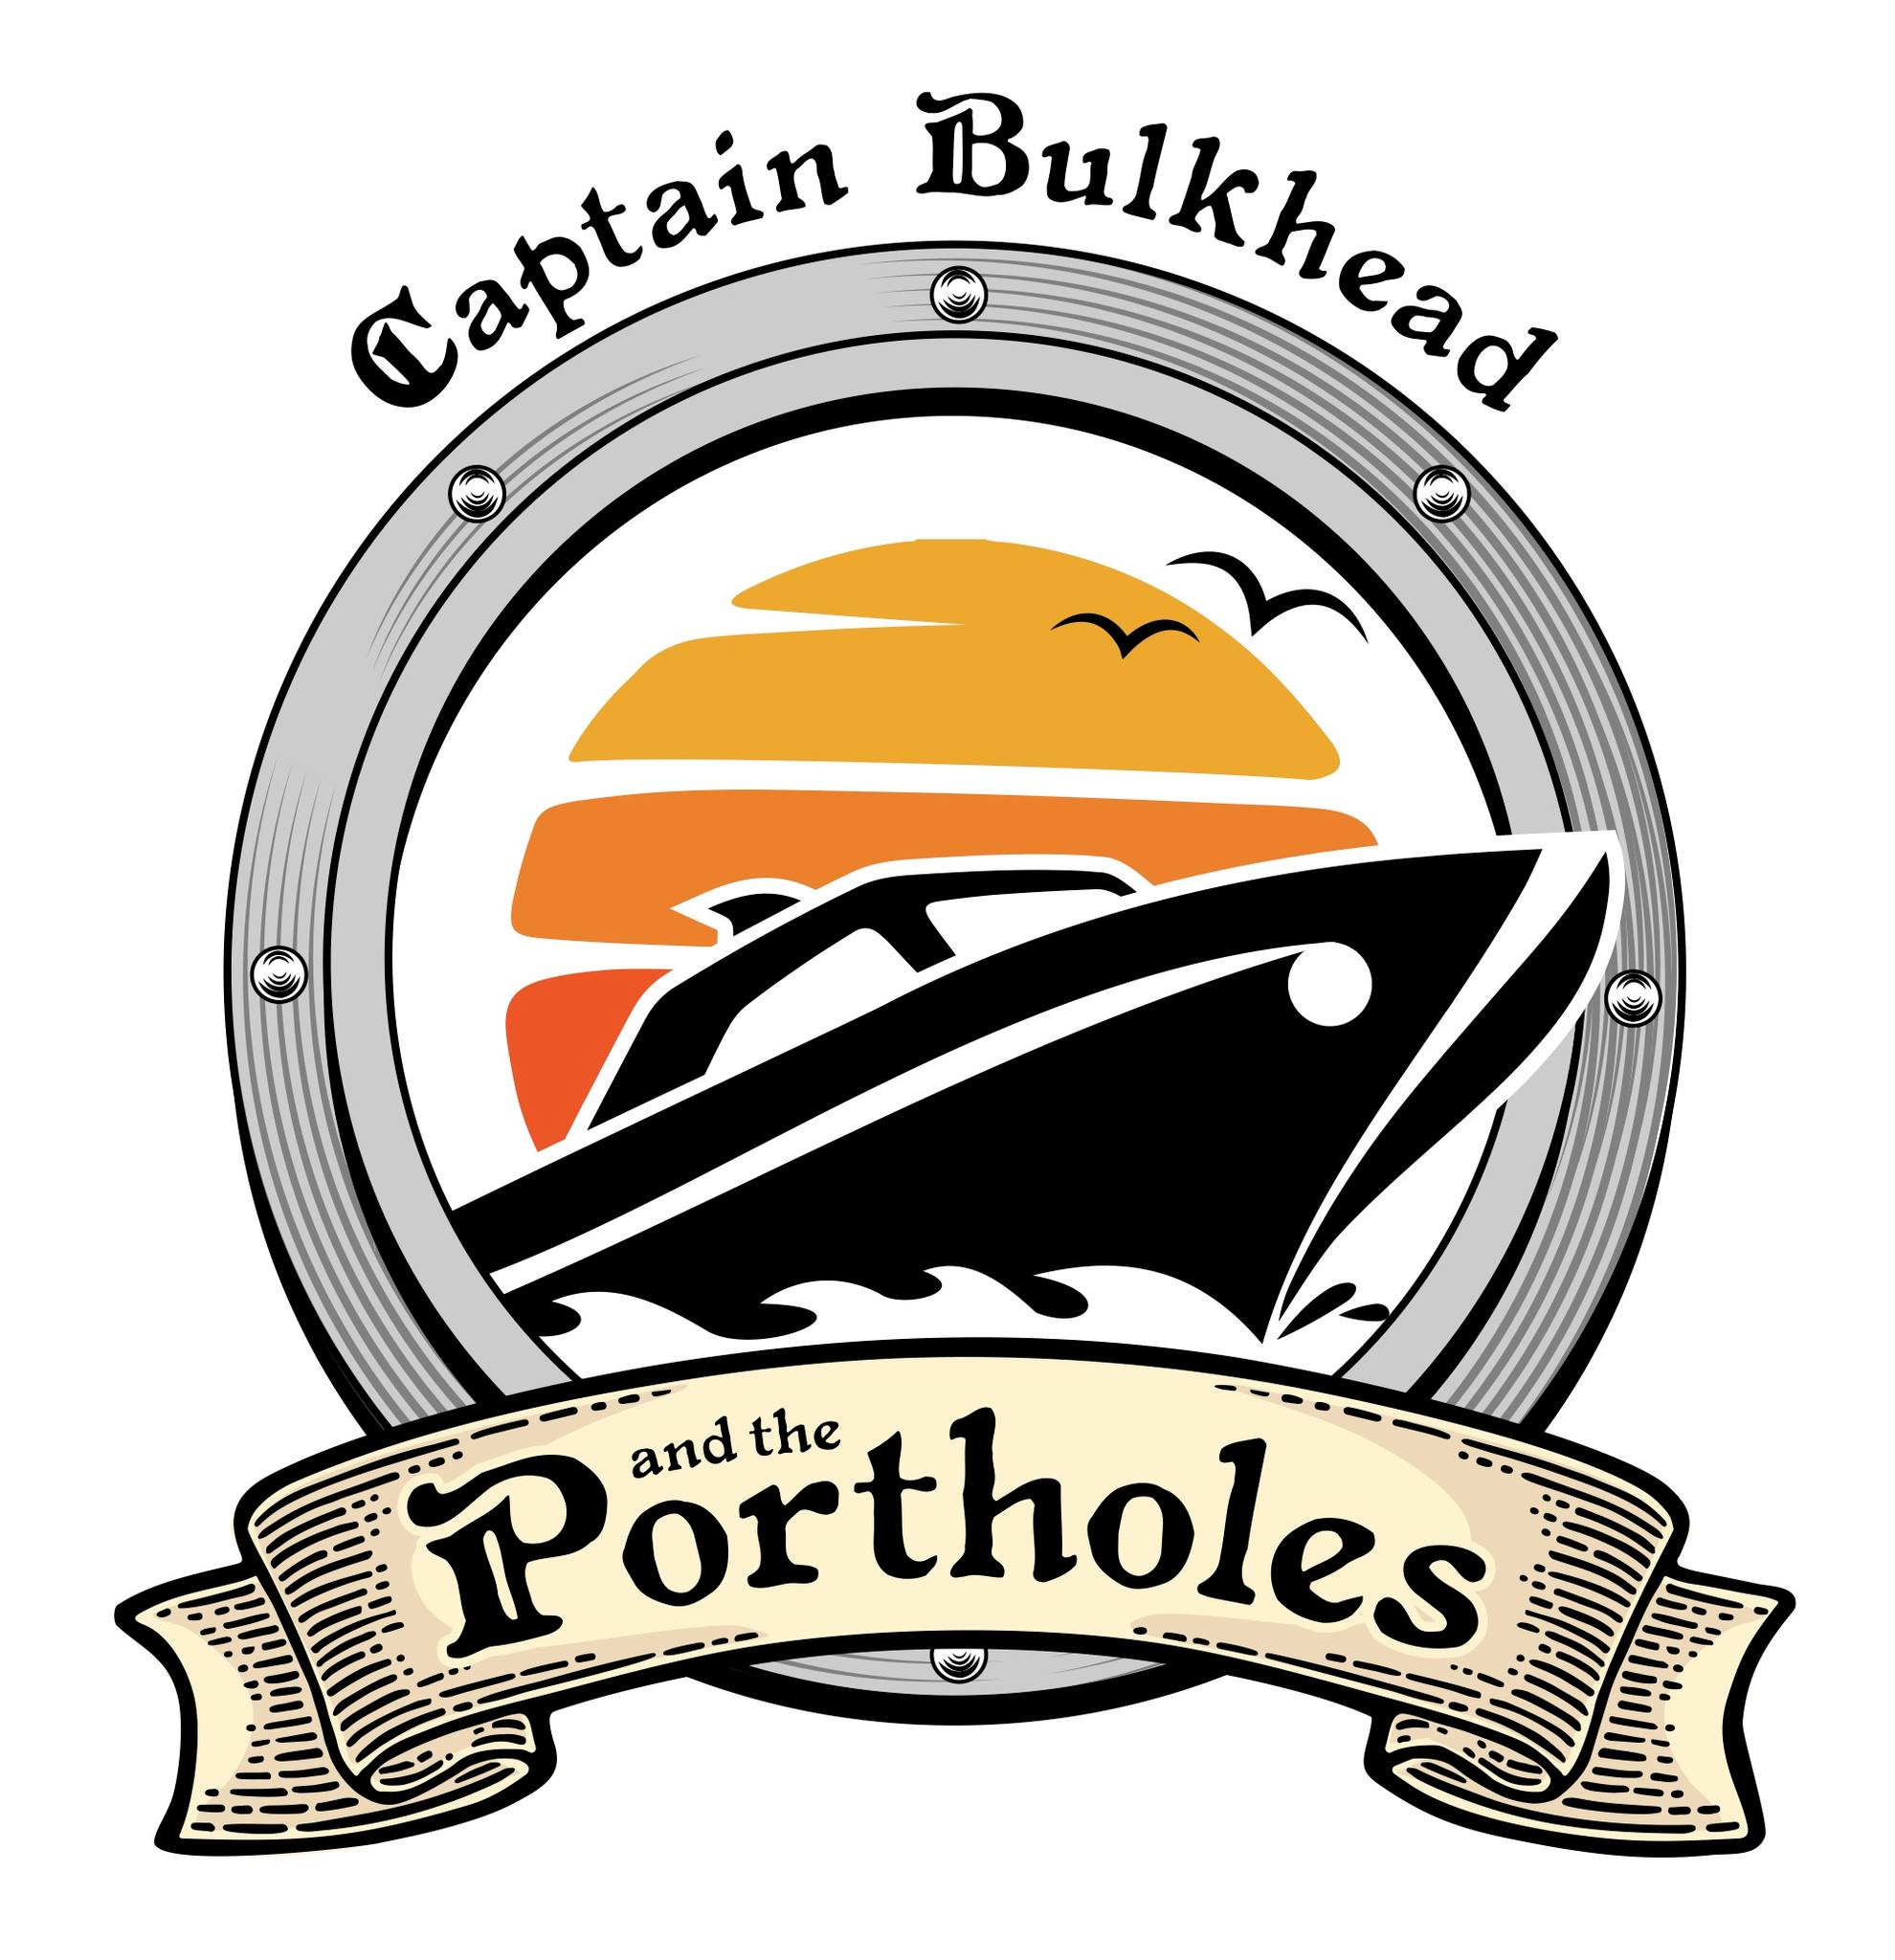 Captain-Bulkhead-and-the-Portholes